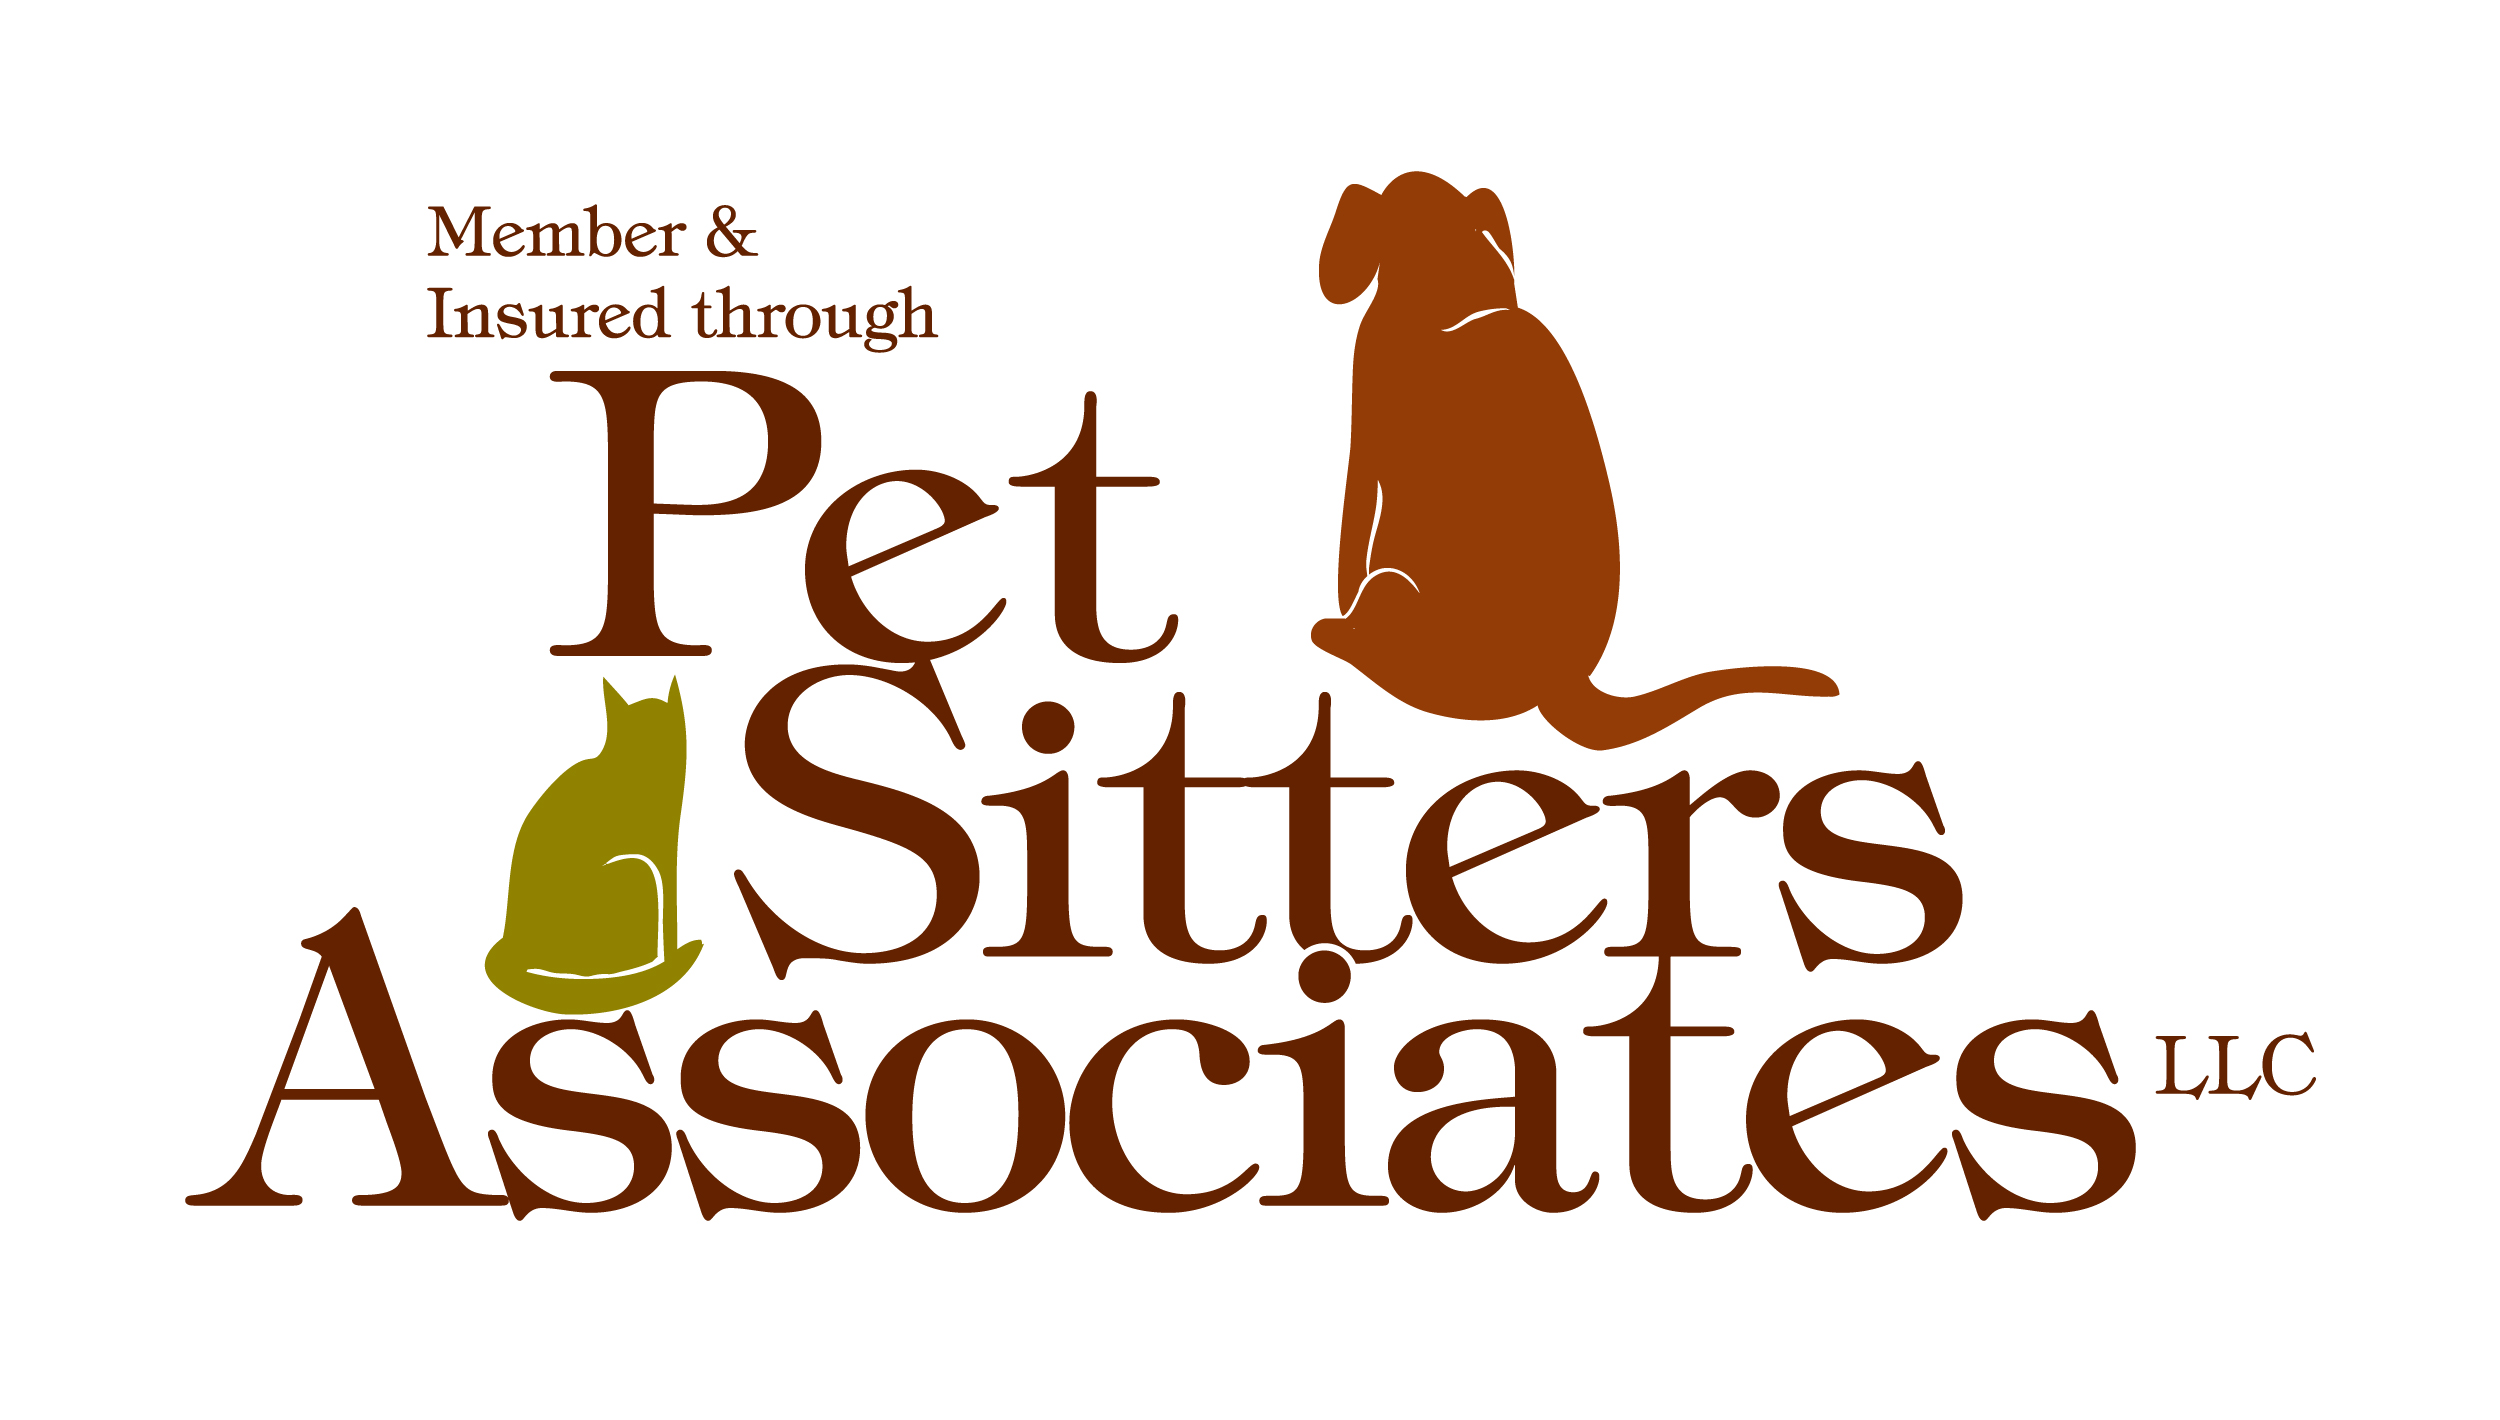 Member and Insured through Pet Sitters Associates LLC